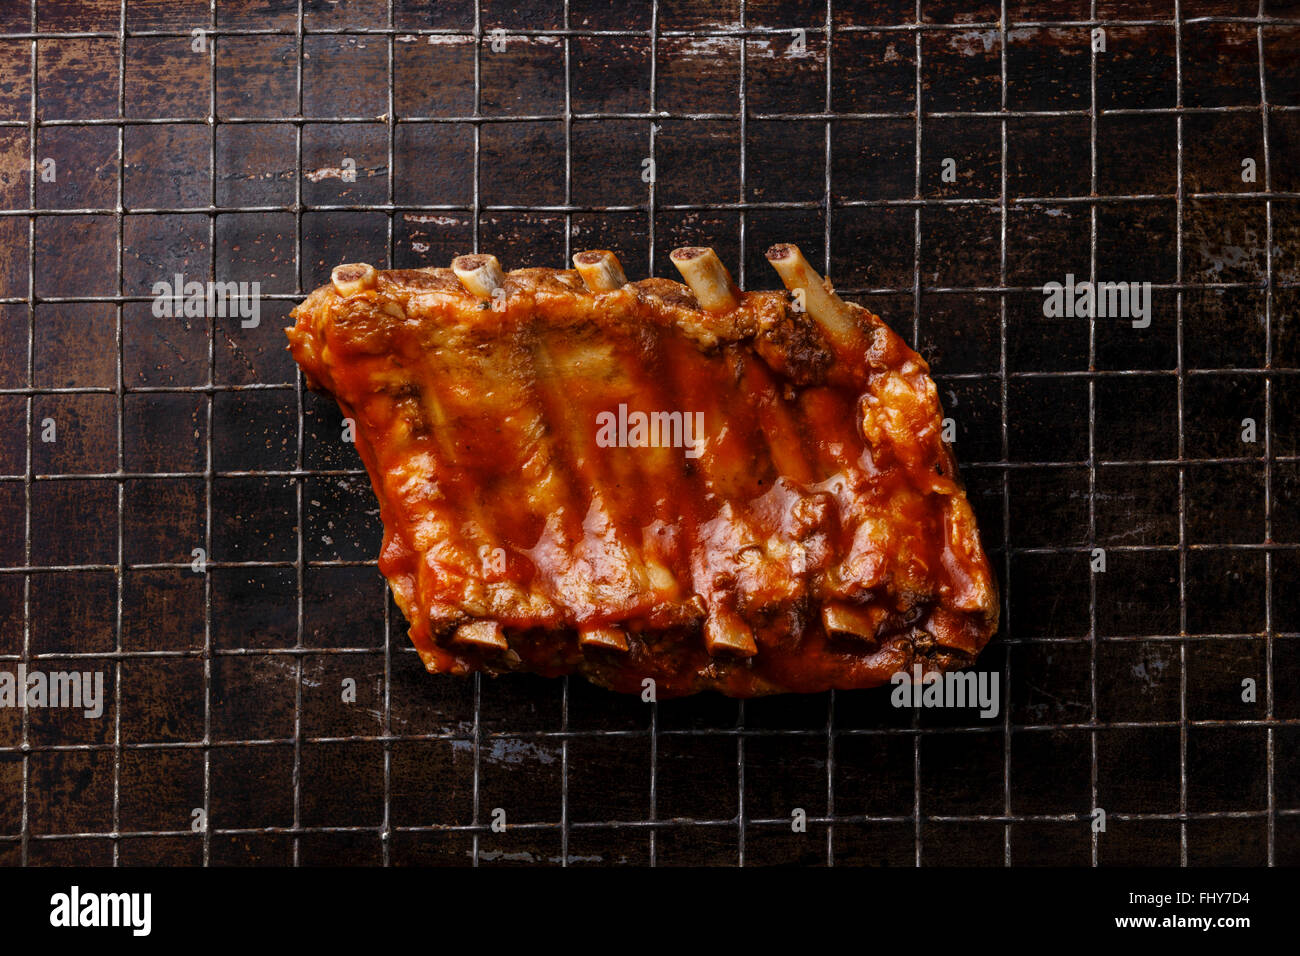 BBQ grilled smoked pork ribs on dark metal baking sheet background Stock Photo